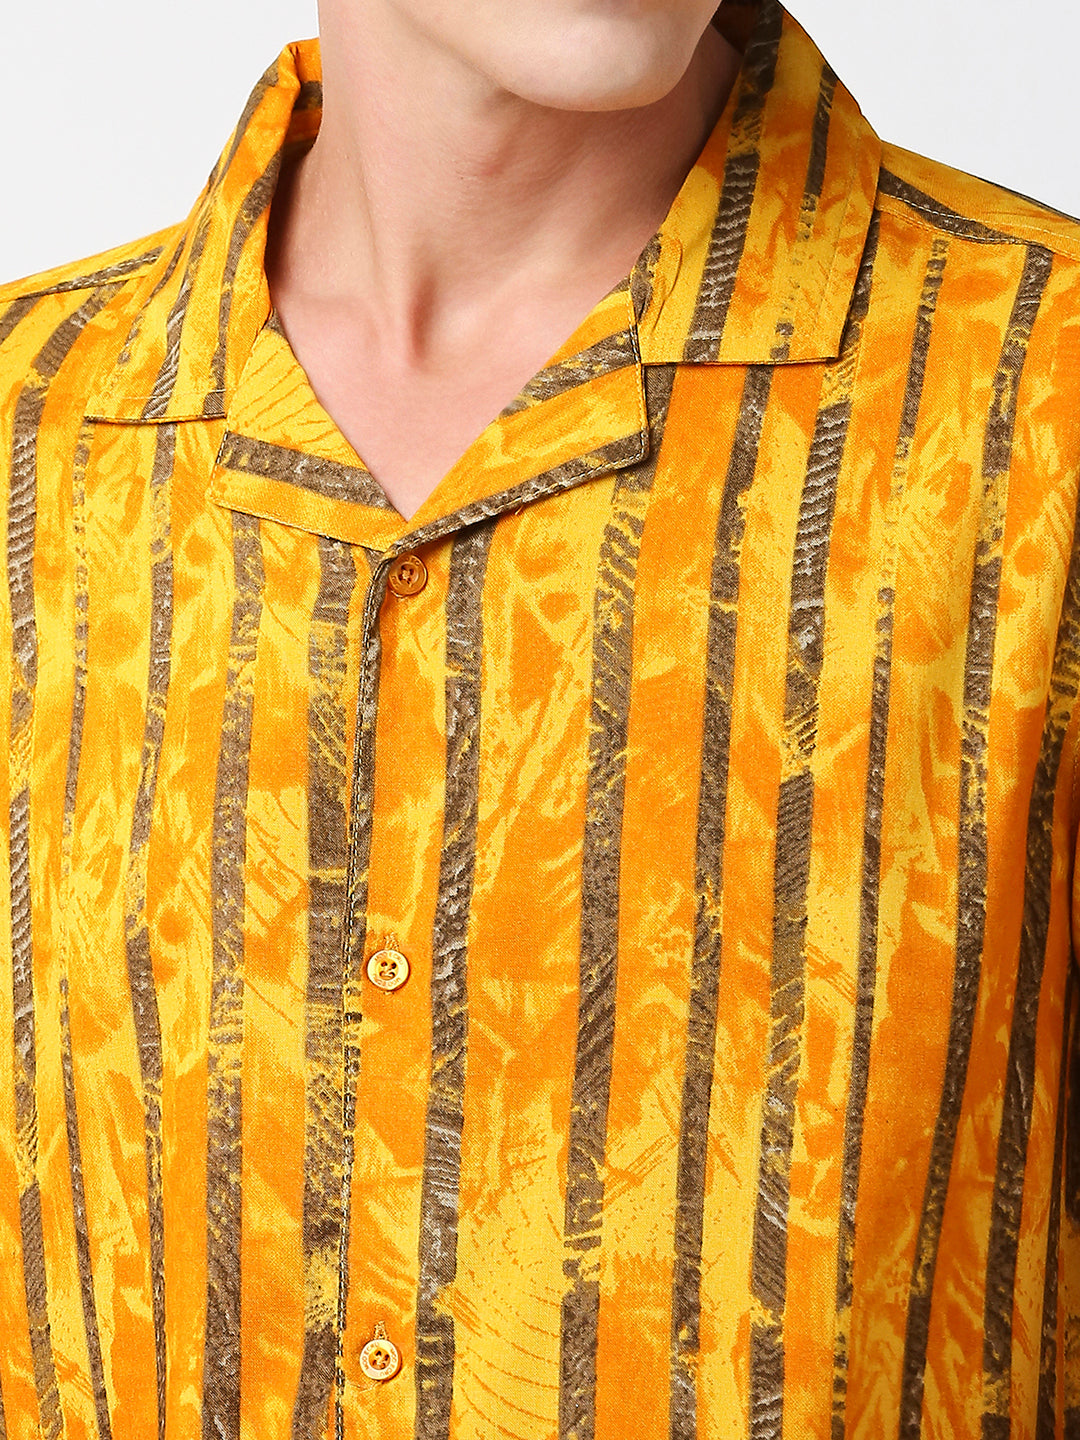 Fantasia Yellow Vertical Stripes Shirt